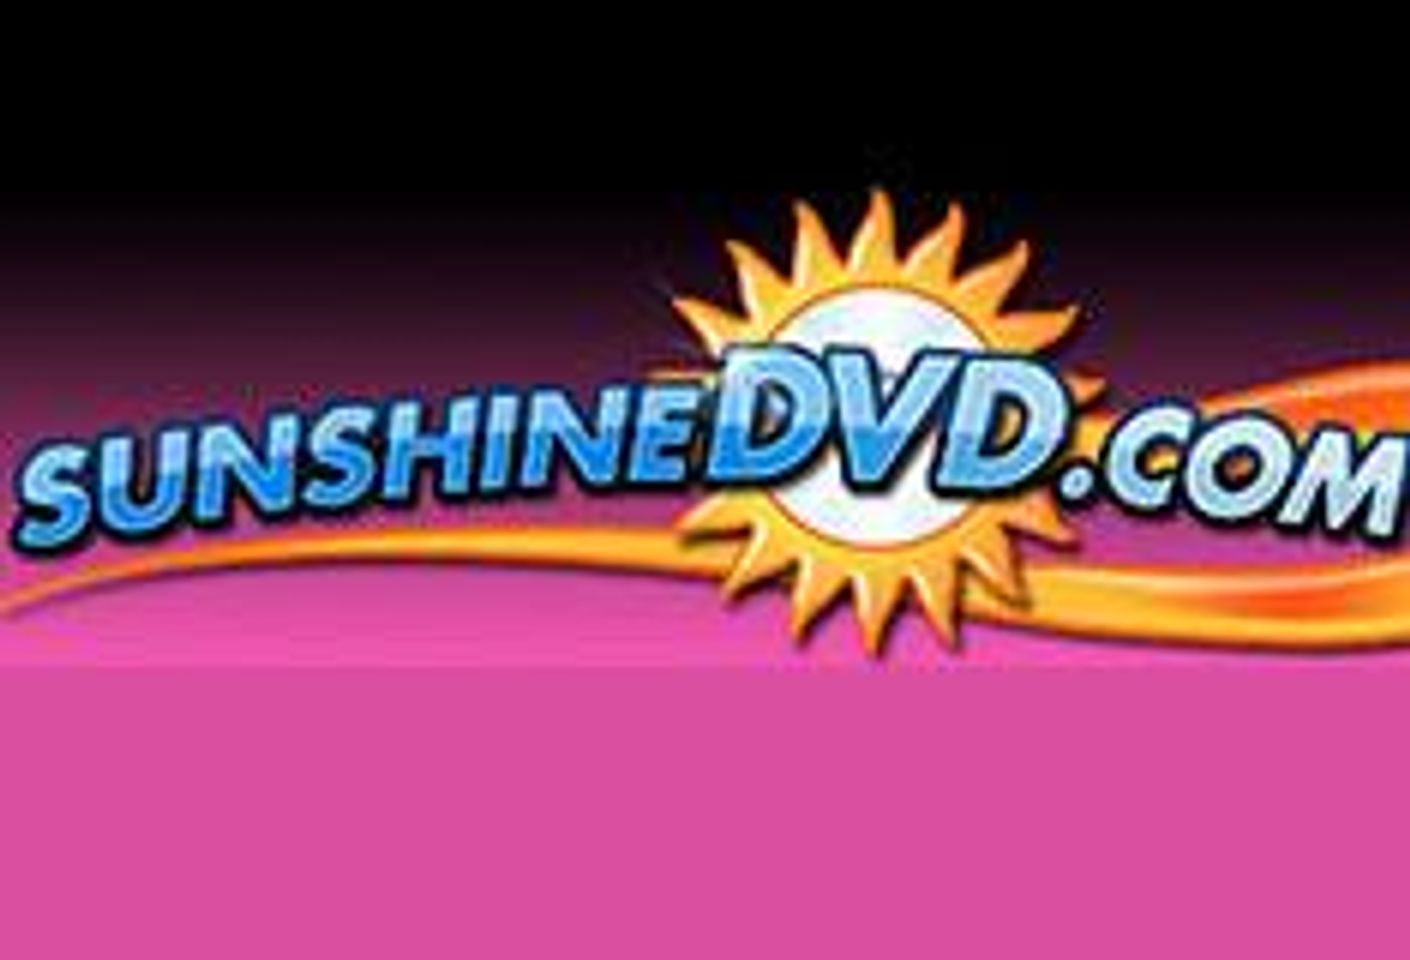 SunshineDVD.com Launches